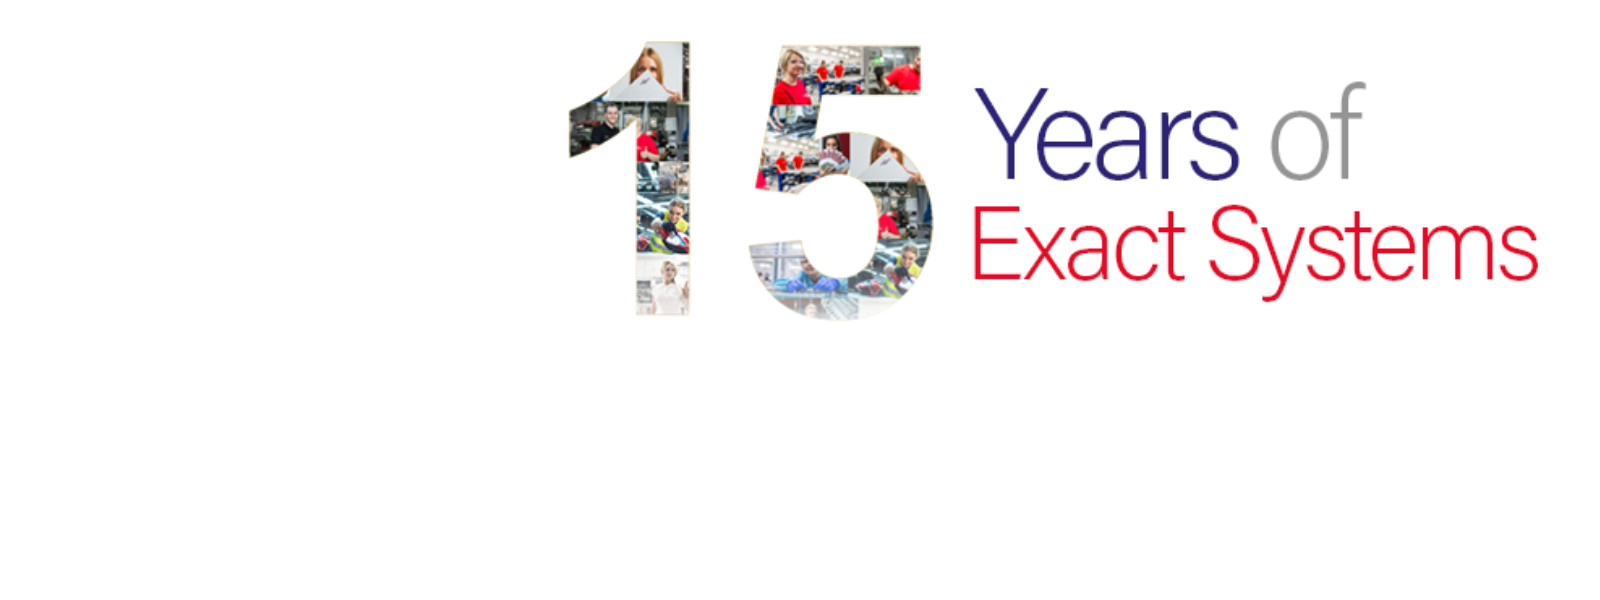 Exact Systems celebrates 15-year milestone